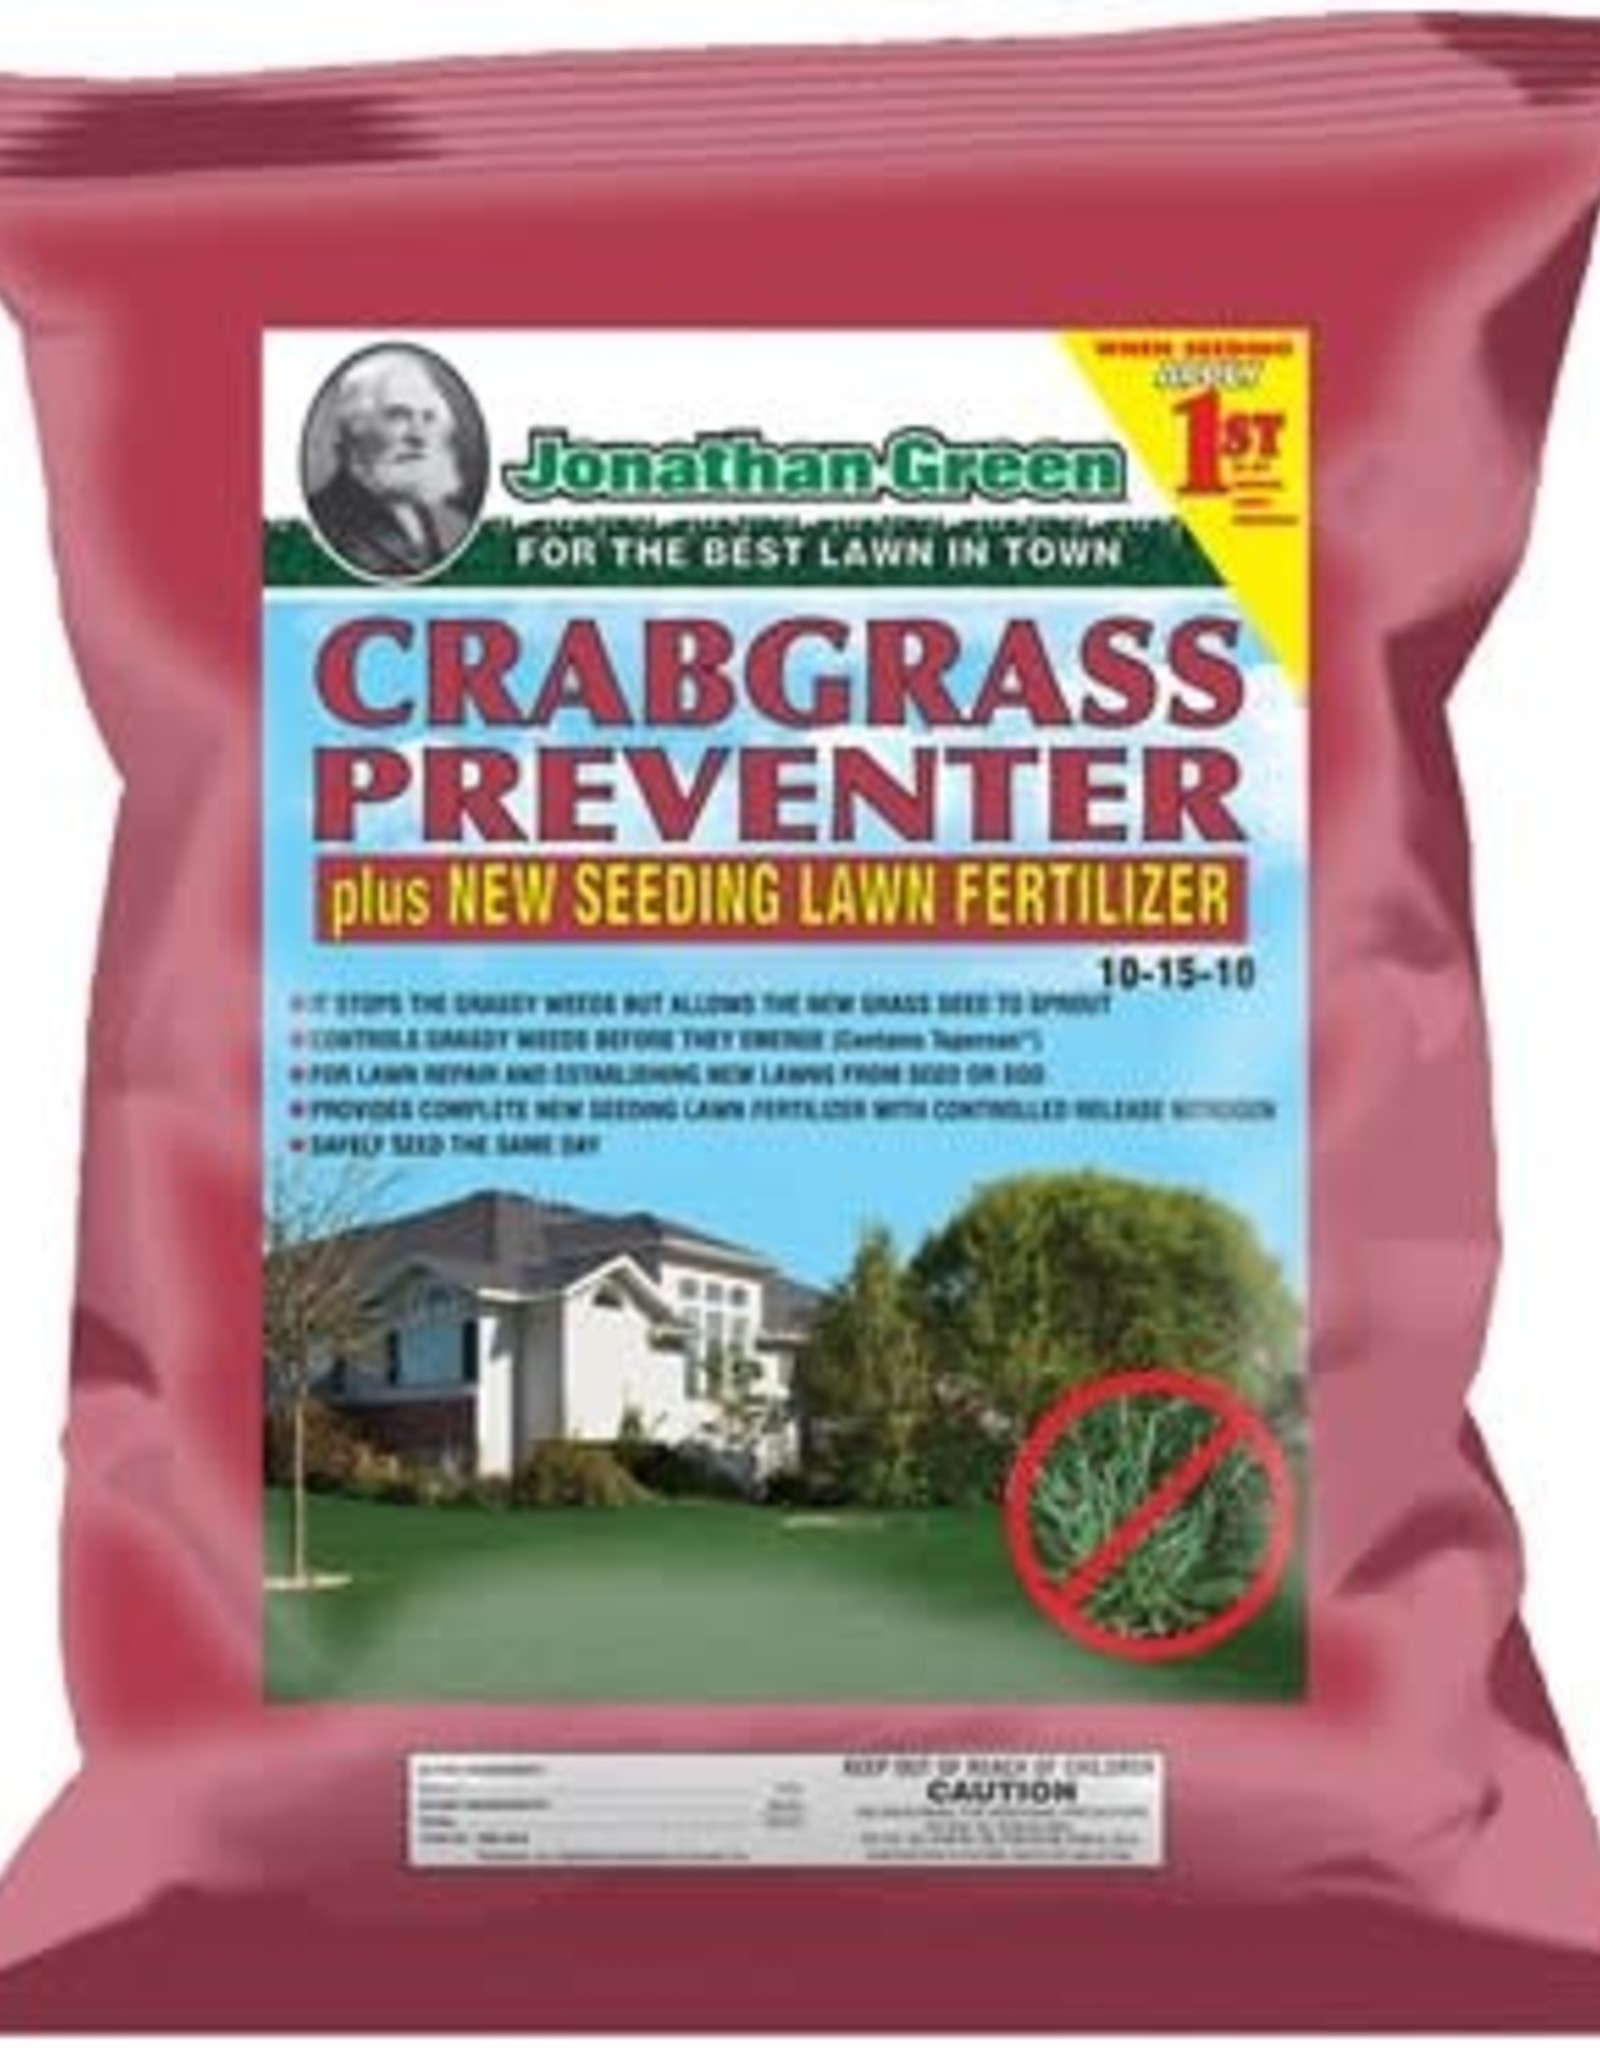 Jonathan Green Crabgrass Preventer + New Seeding Lawn Fertilizer